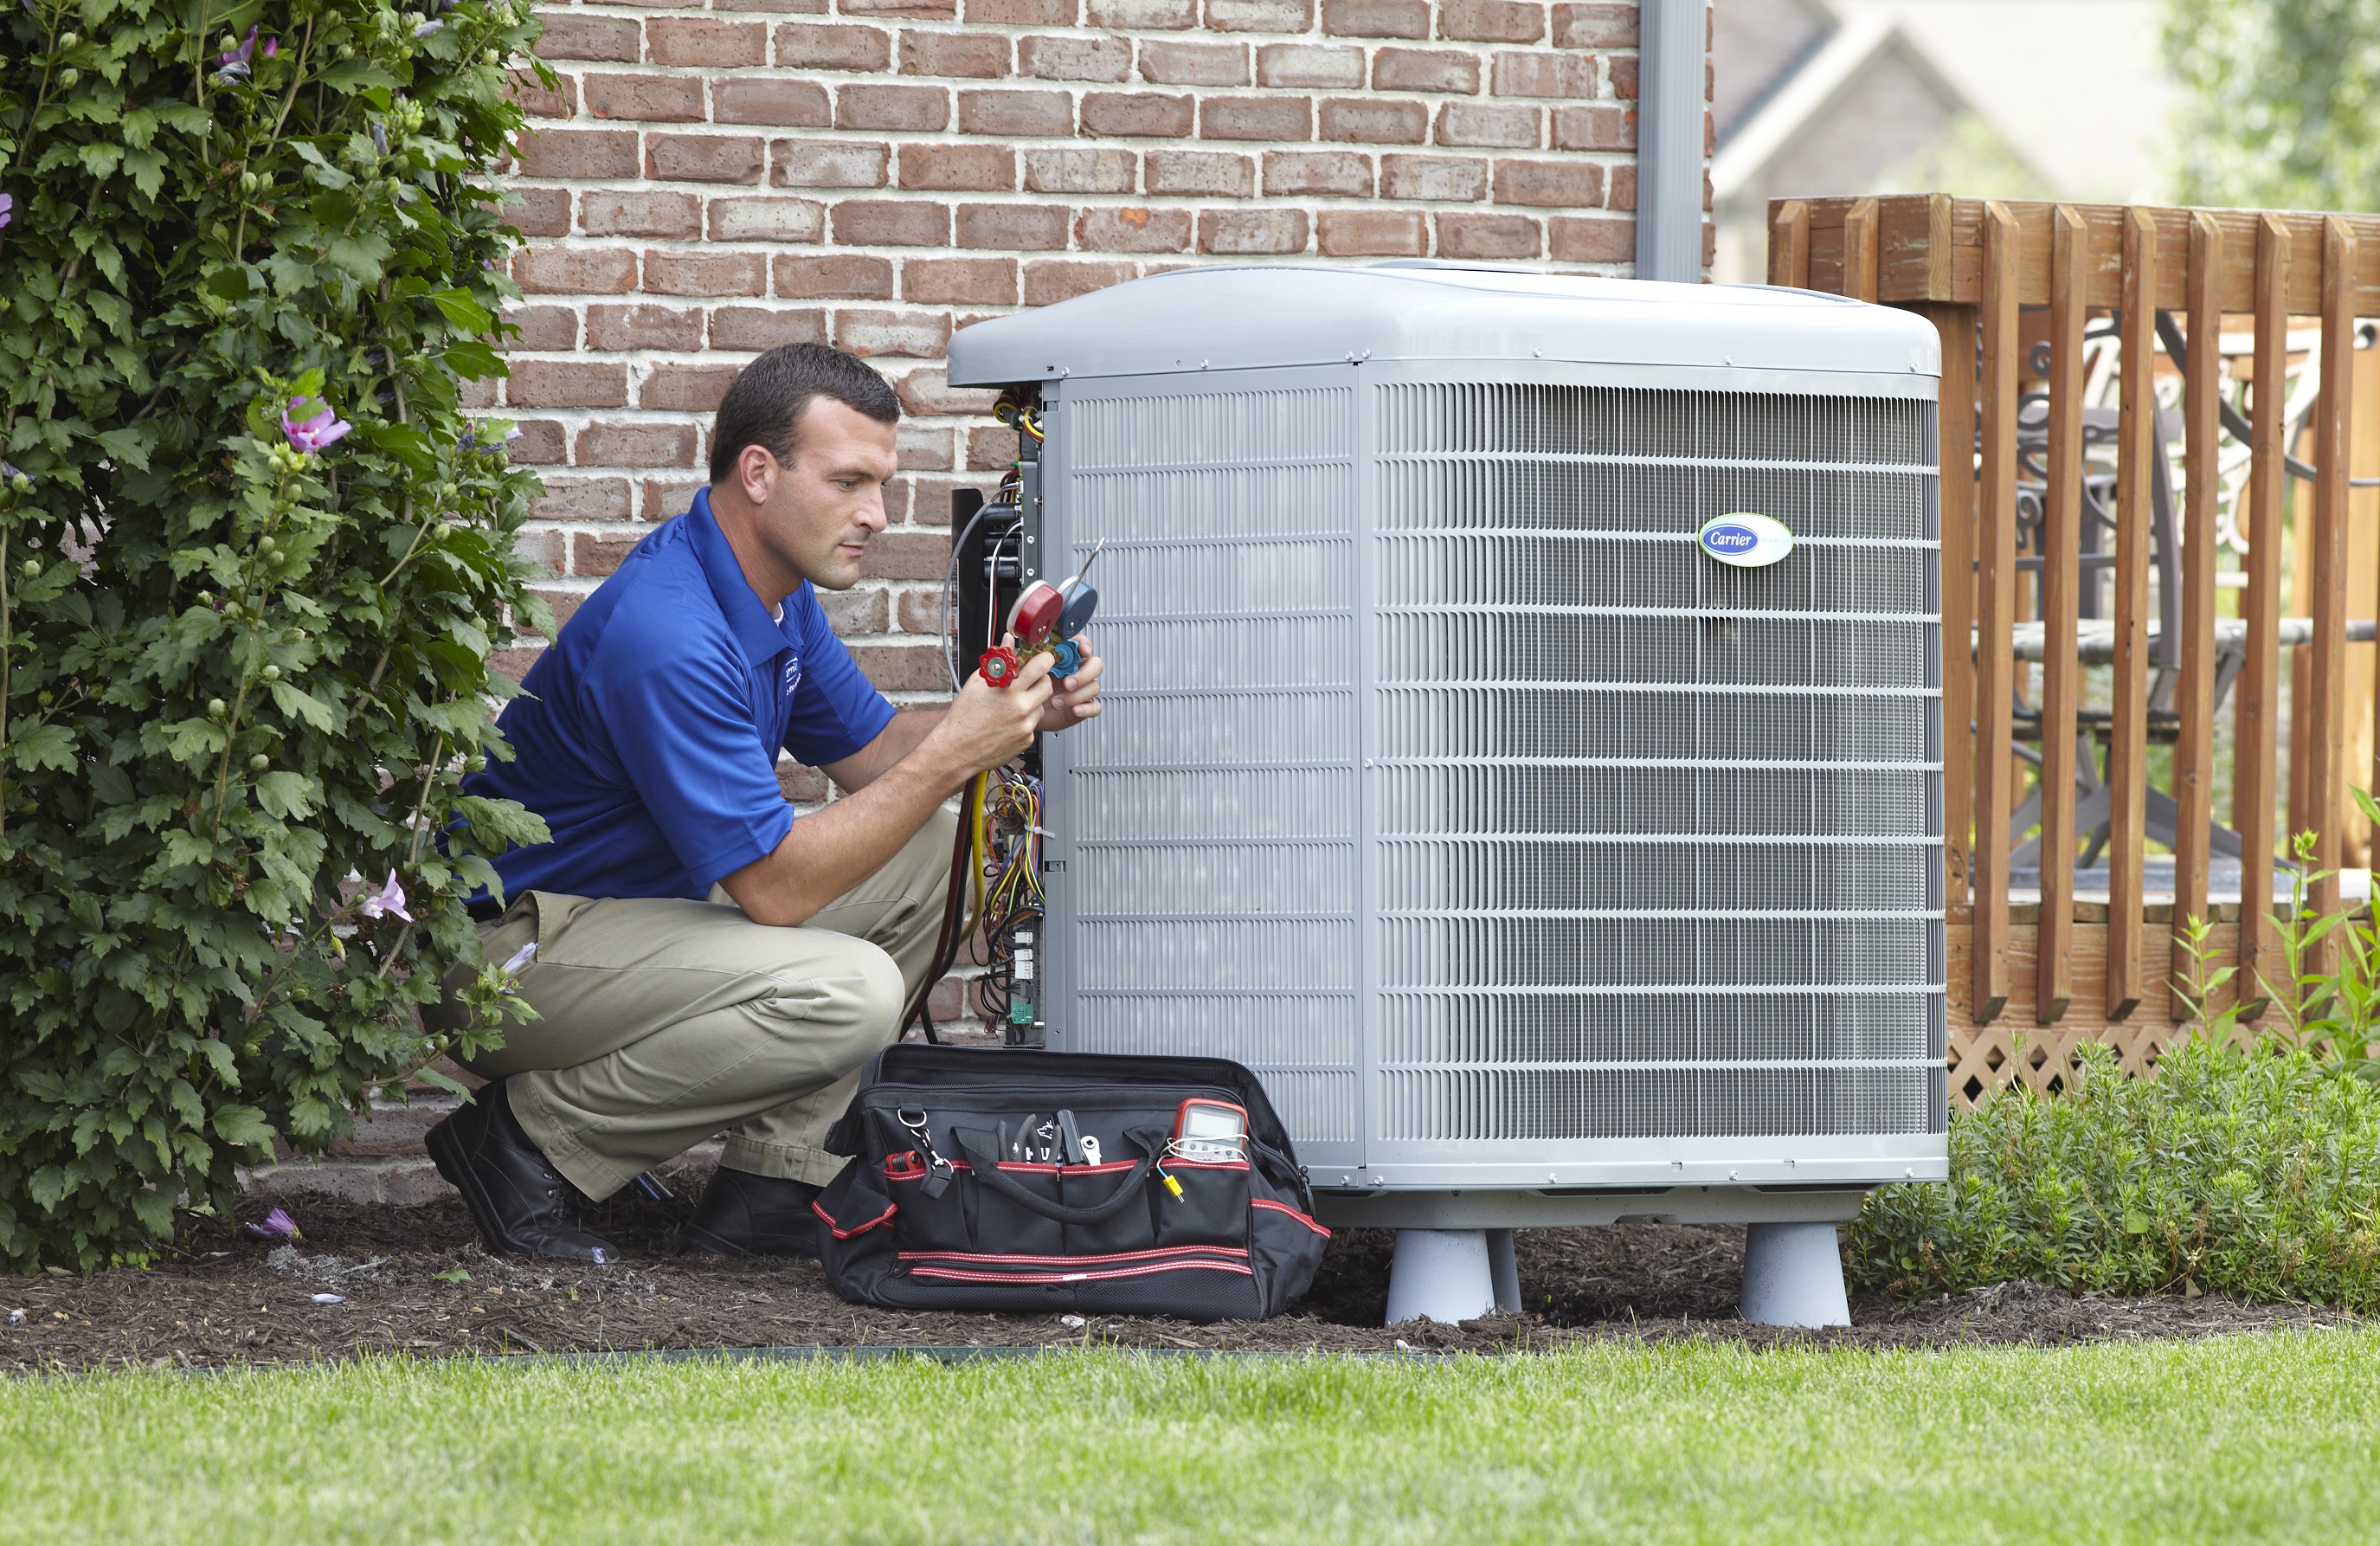 residential air conditioning repair